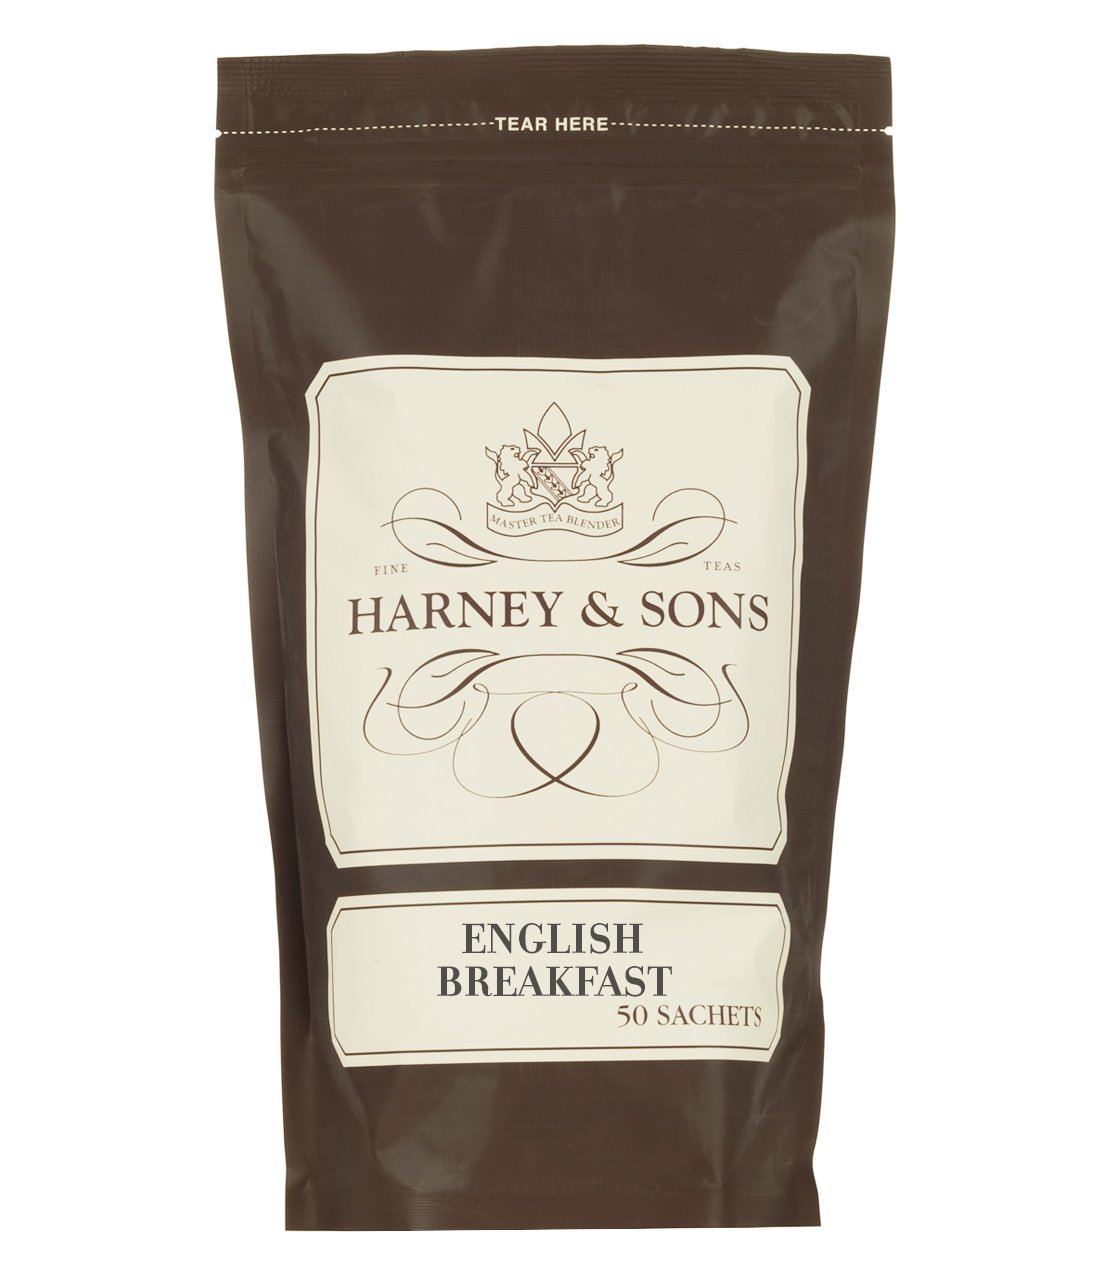 English Breakfast - Harney & Sons Teas, European Distribution Center